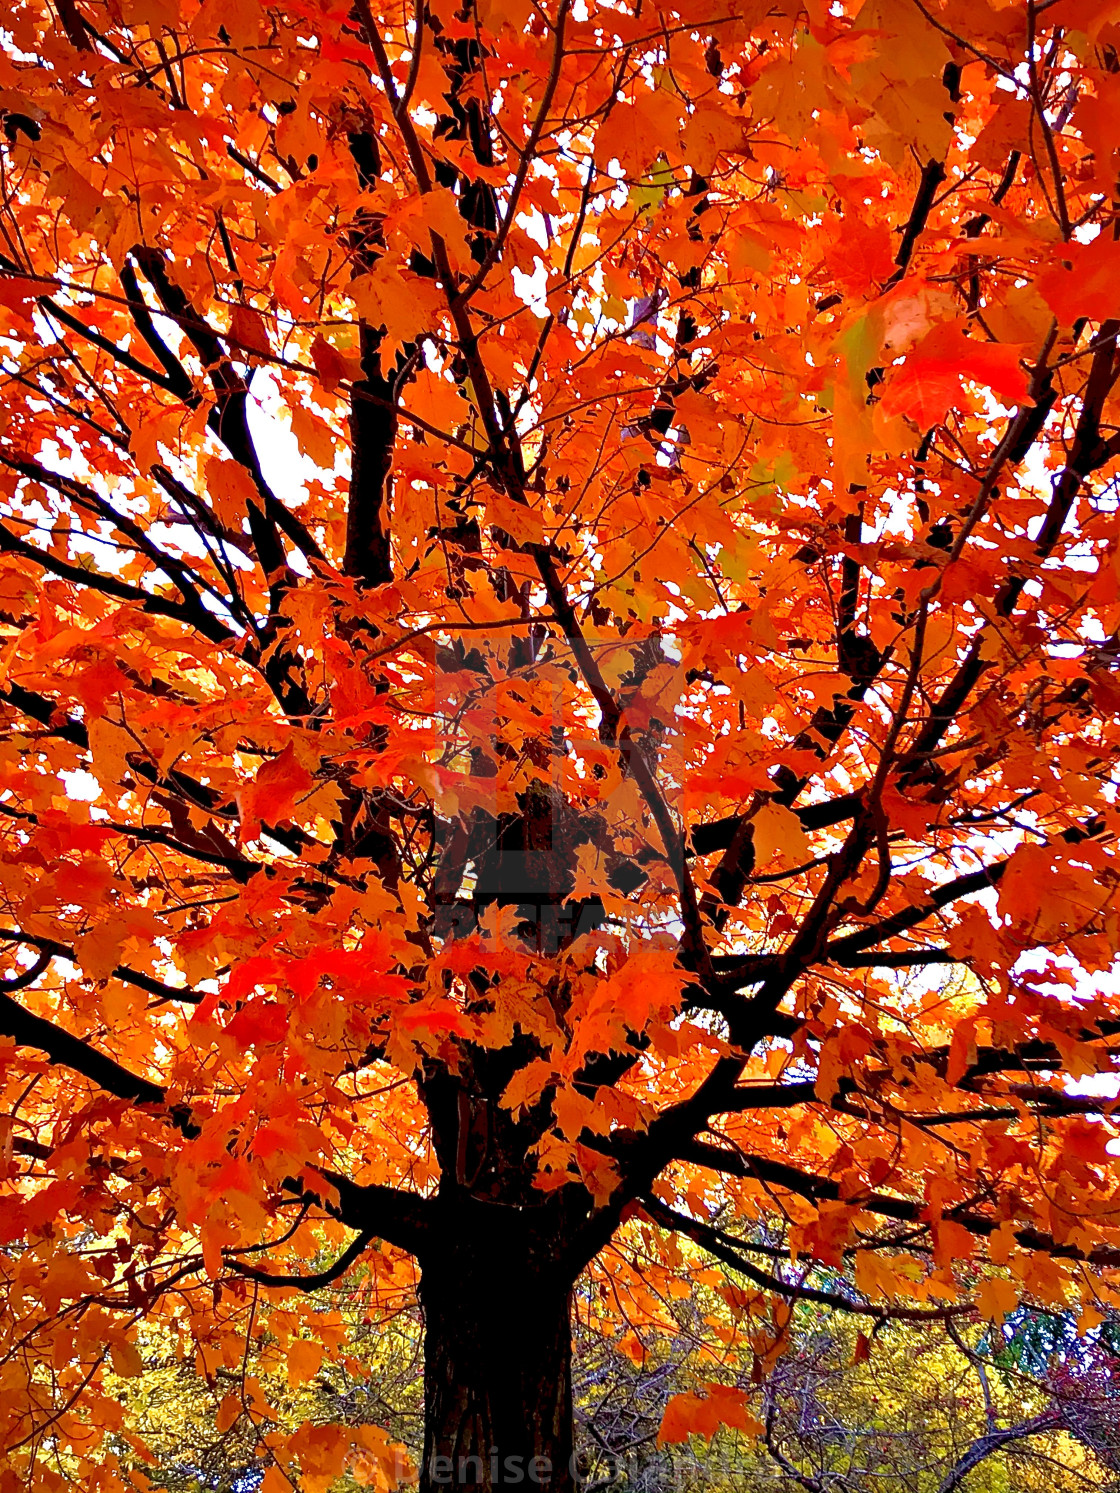 "A Trees Fall Glory" stock image